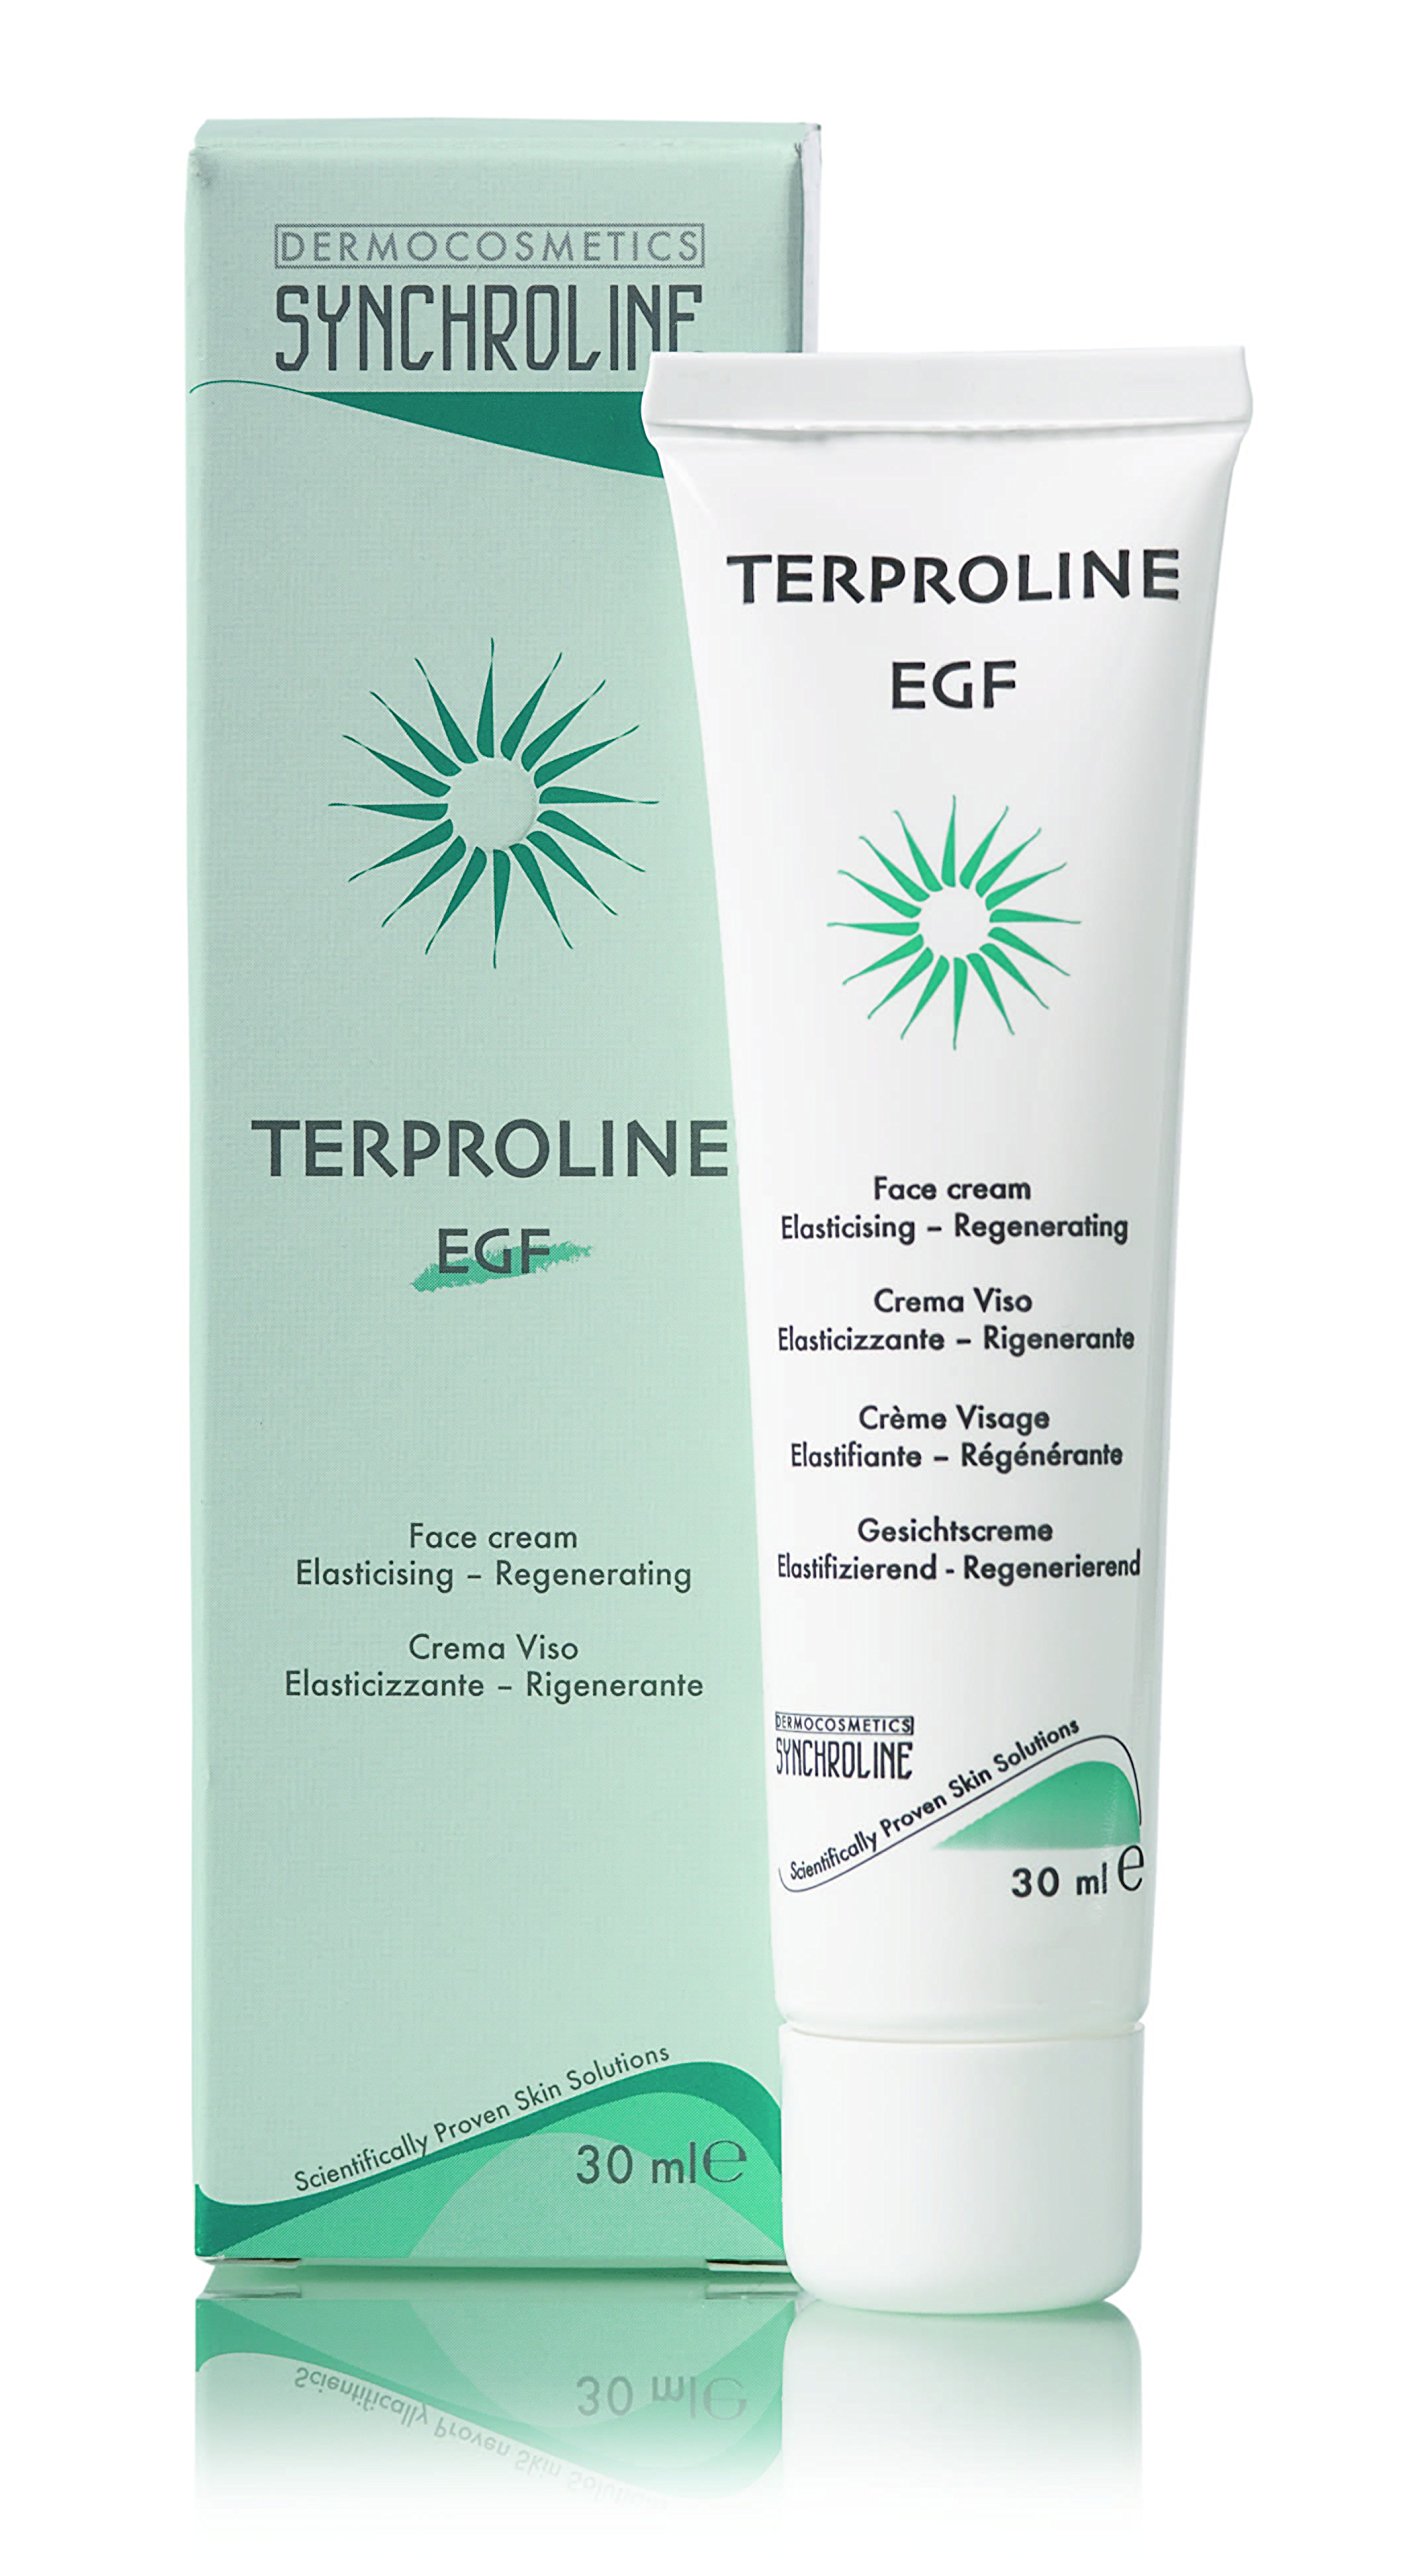 Synchroline Terproline EGF 30ml - Unboxed by Synchroline